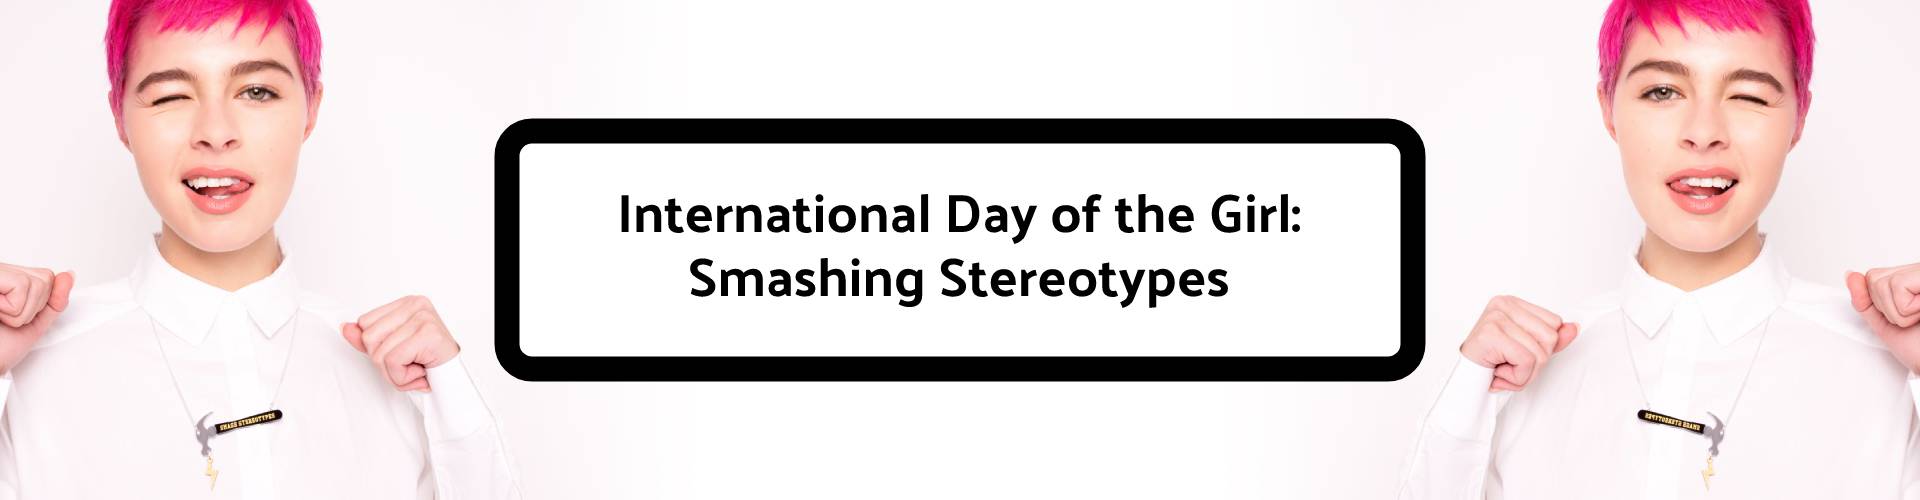 International Day of the Girl: Smashing Stereotypes